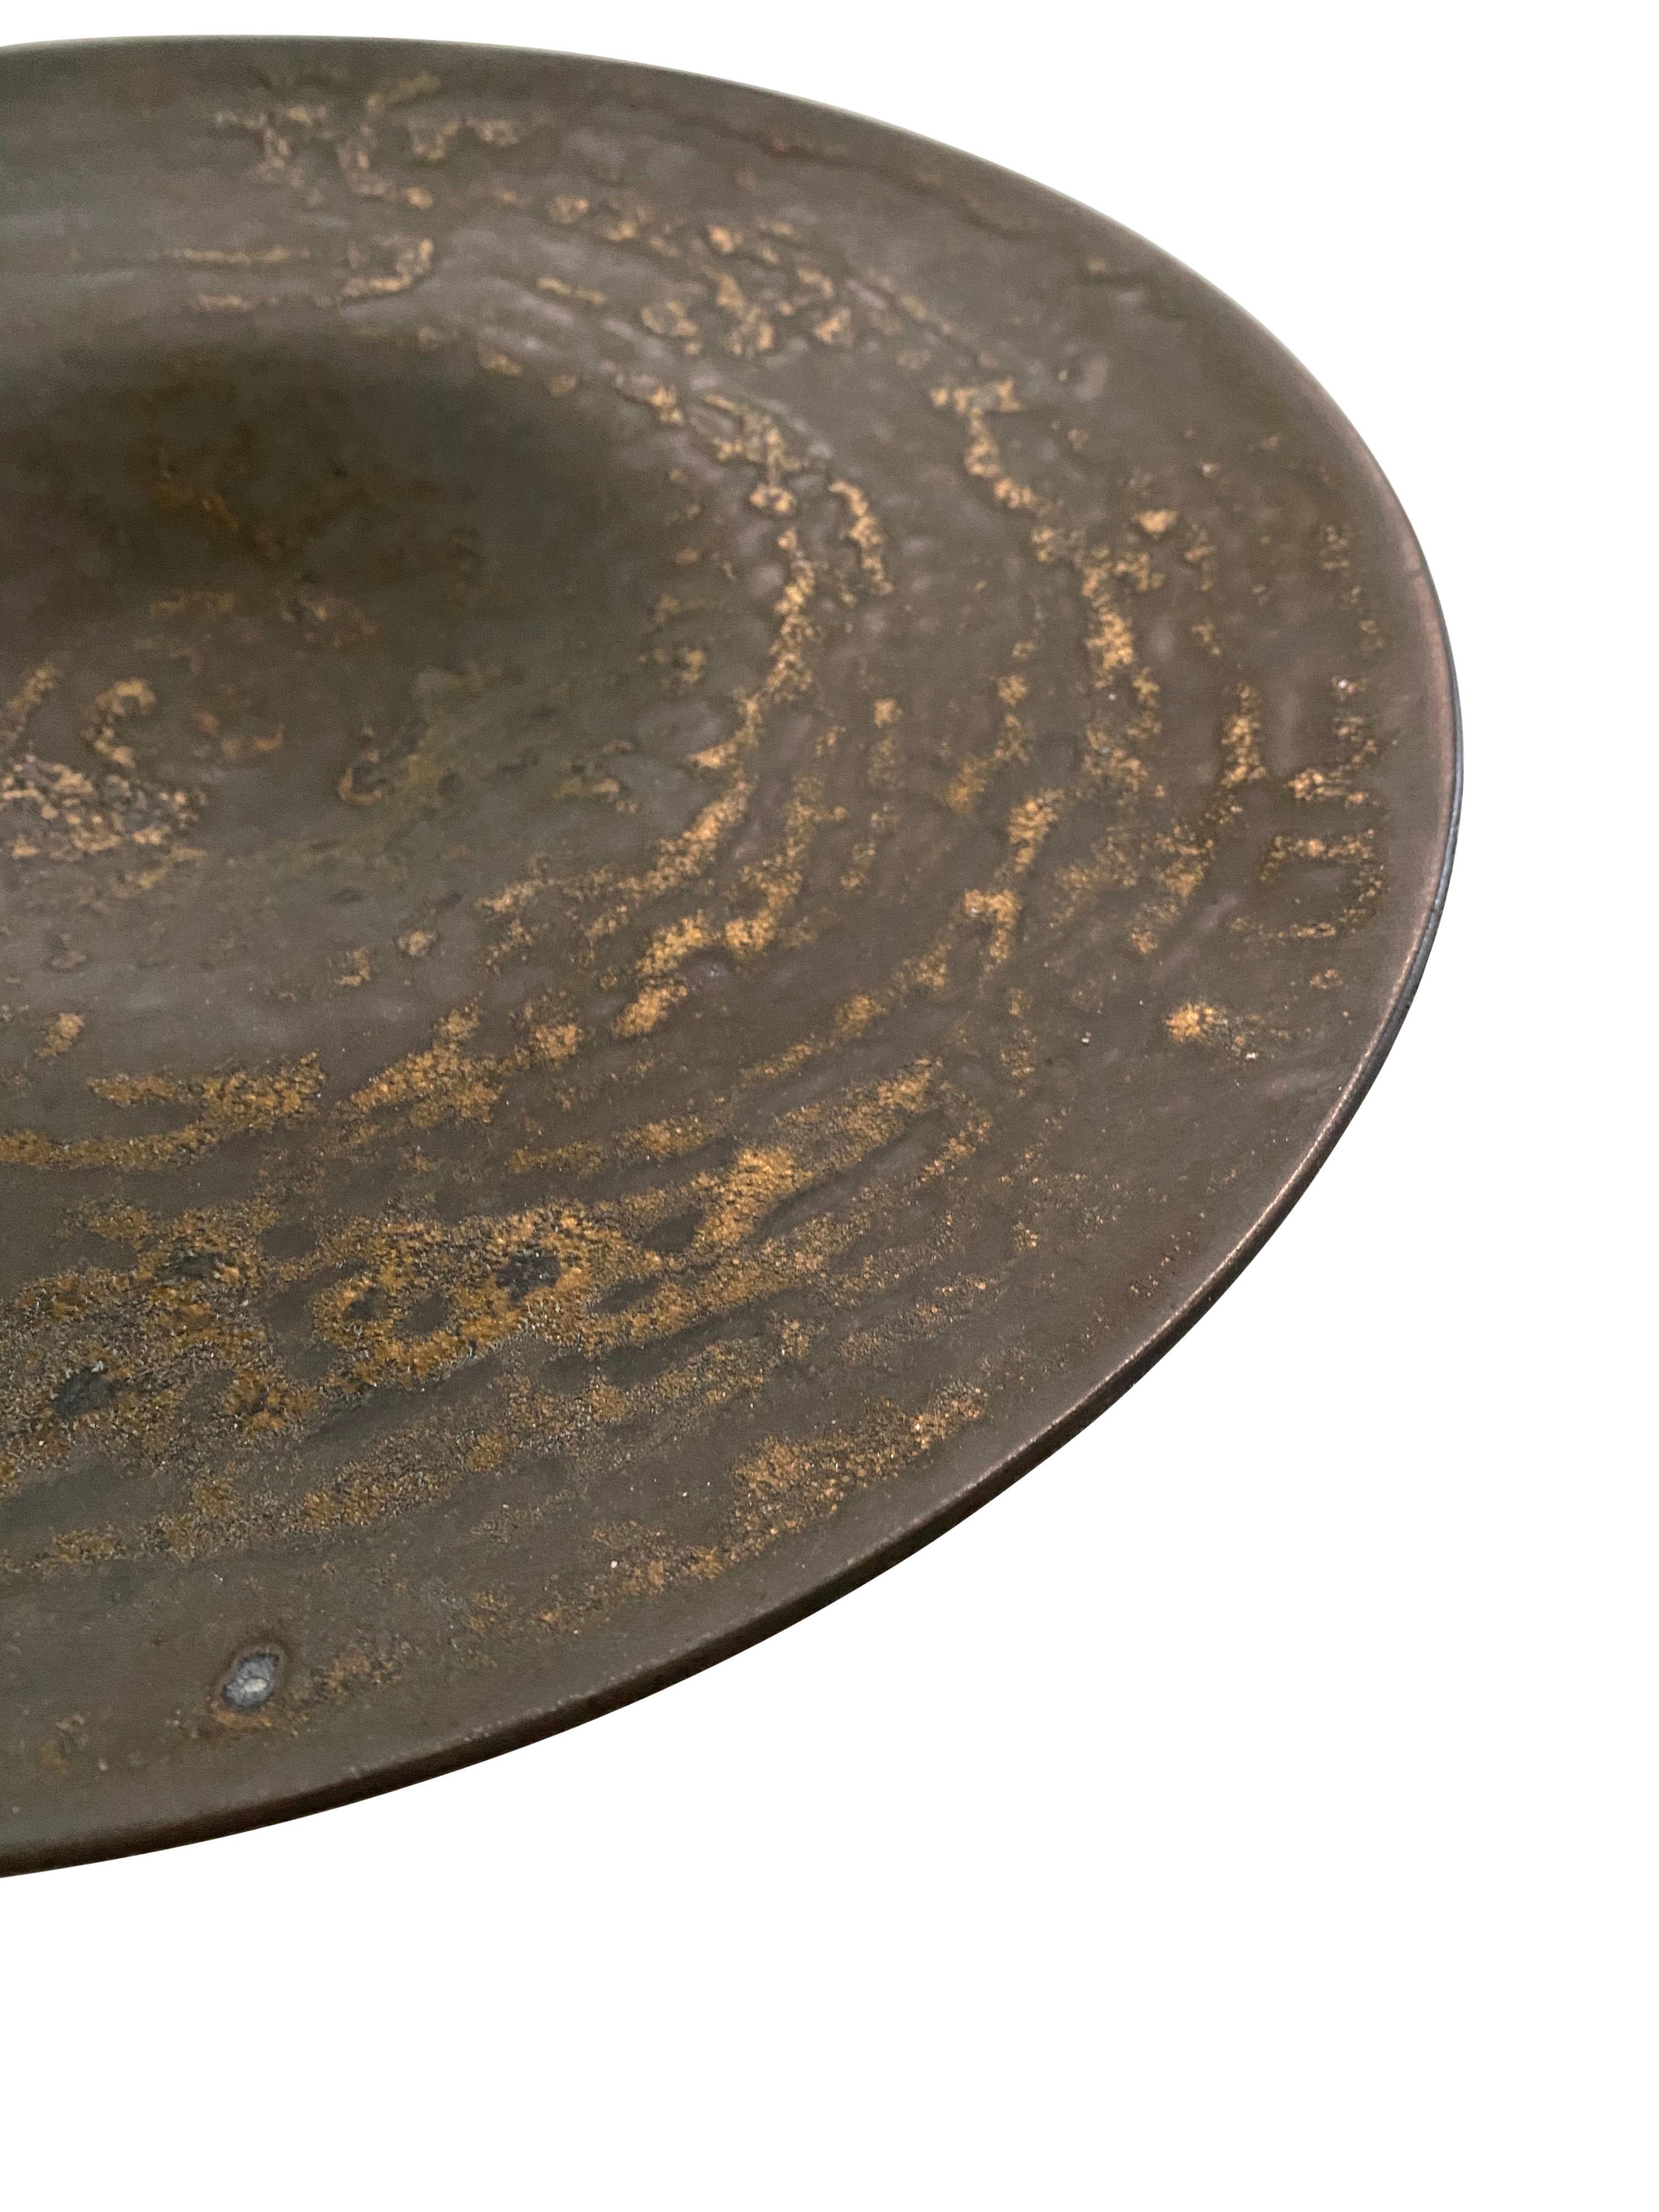 North American Hammered Bronze Stoneware Platter by American Ceramicist Sandi Fellman, USA